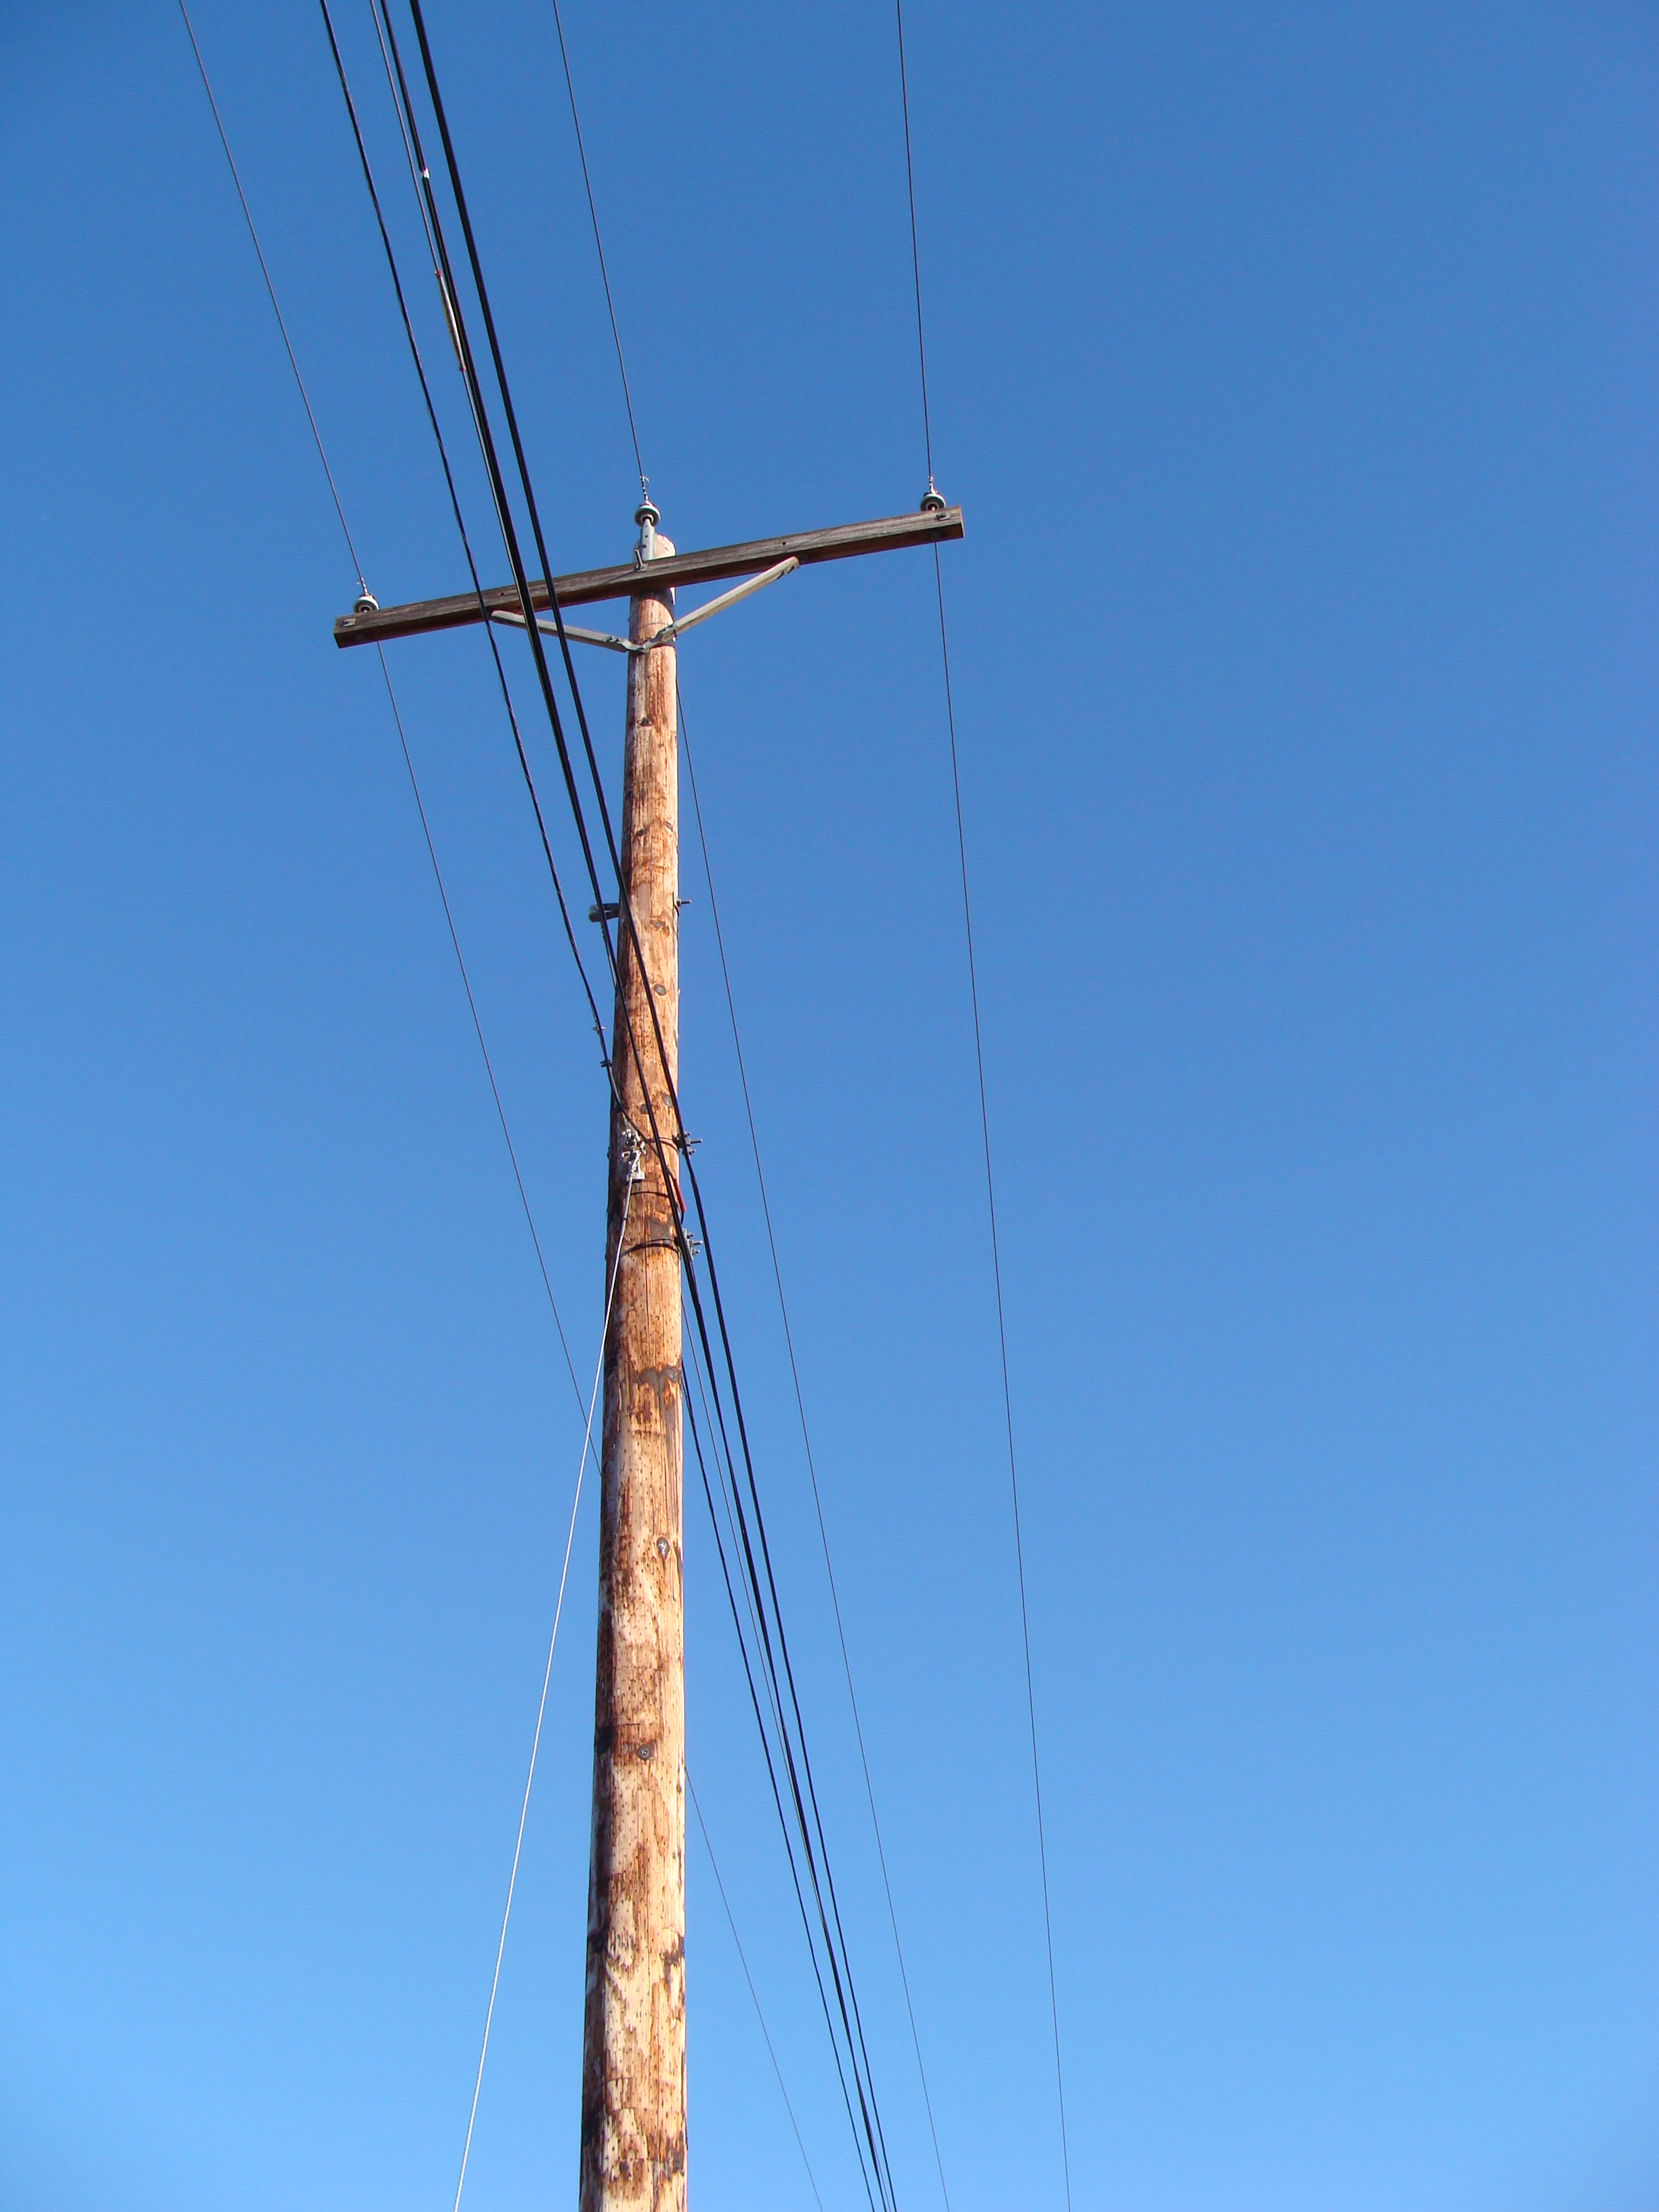 File:Power line.jpg - Wikimedia Commons